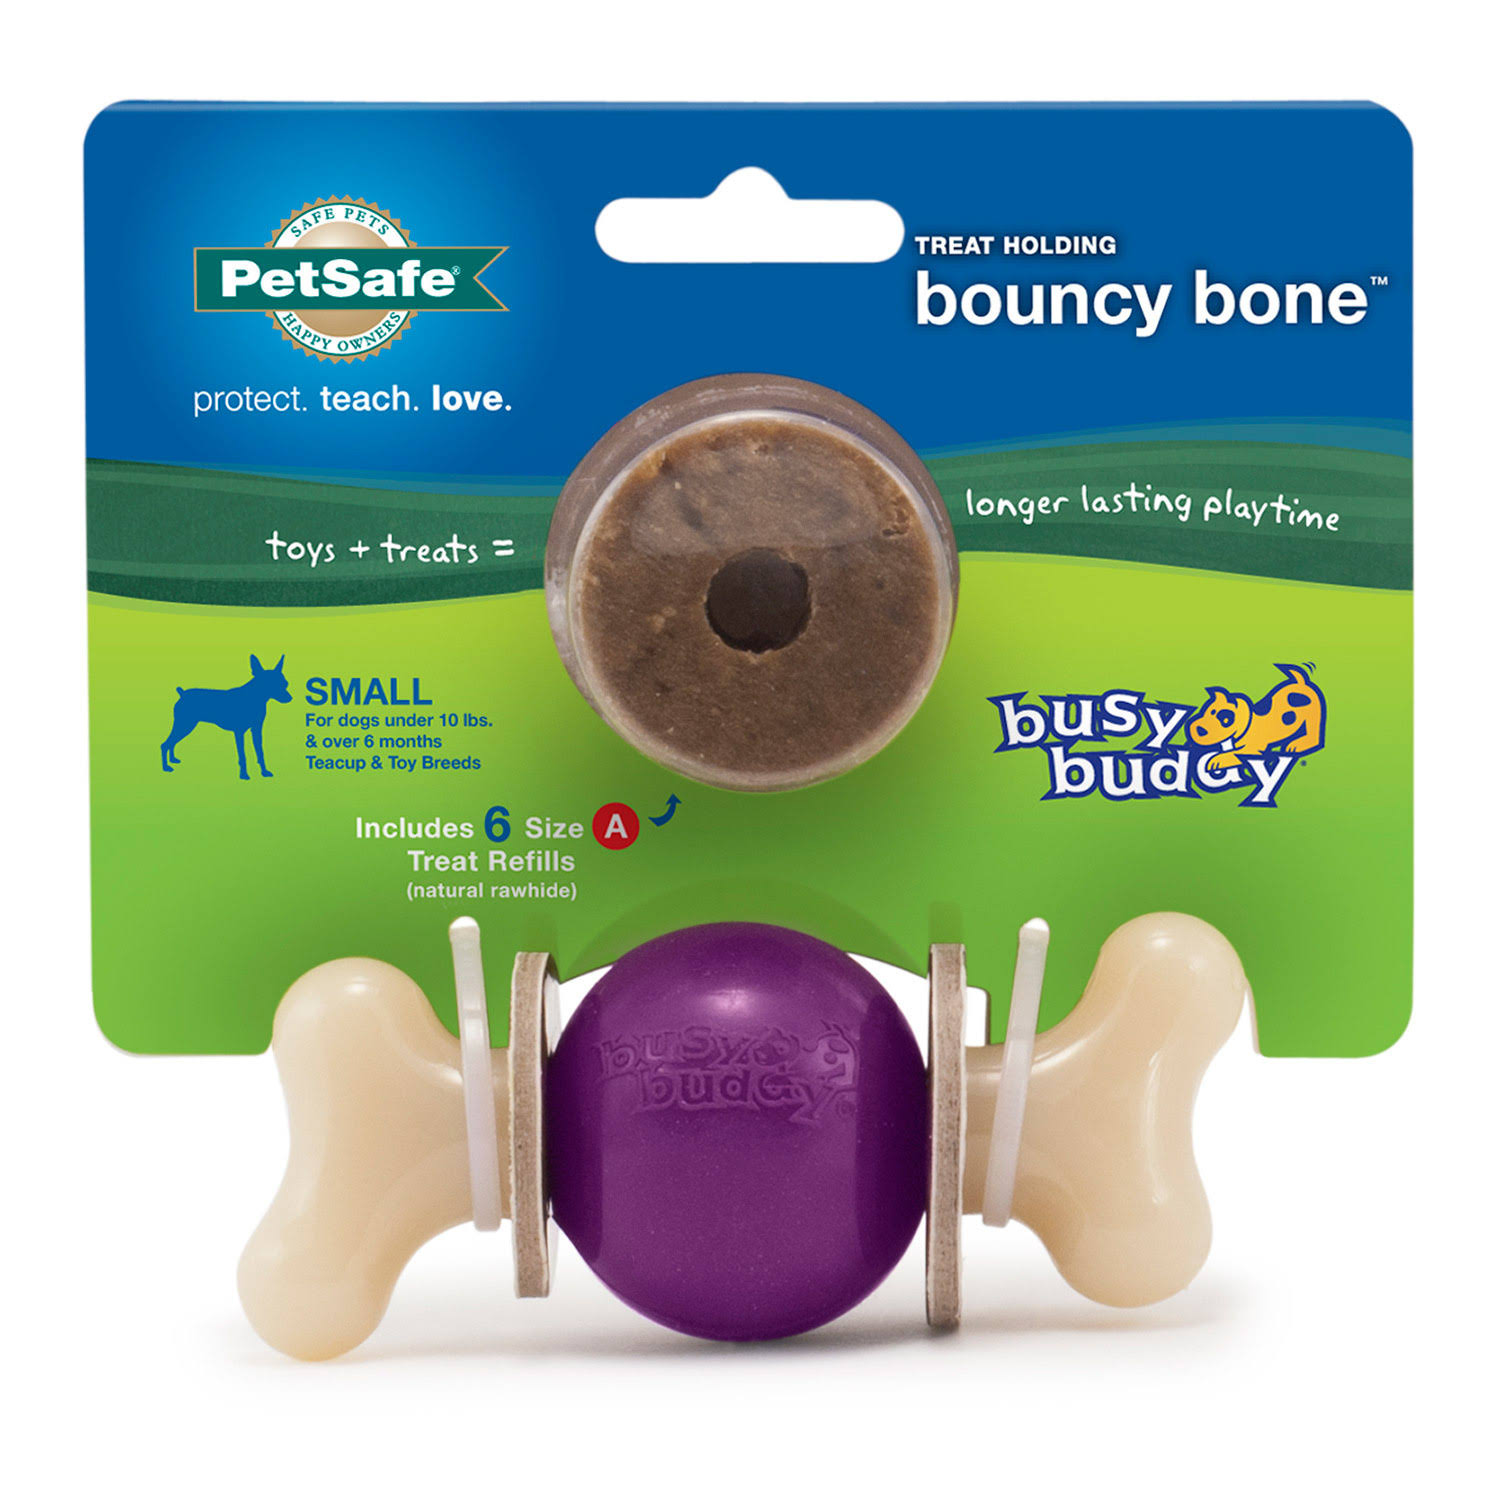 PetSafe Busy Buddy Bouncy Bone Dog Toy - Small